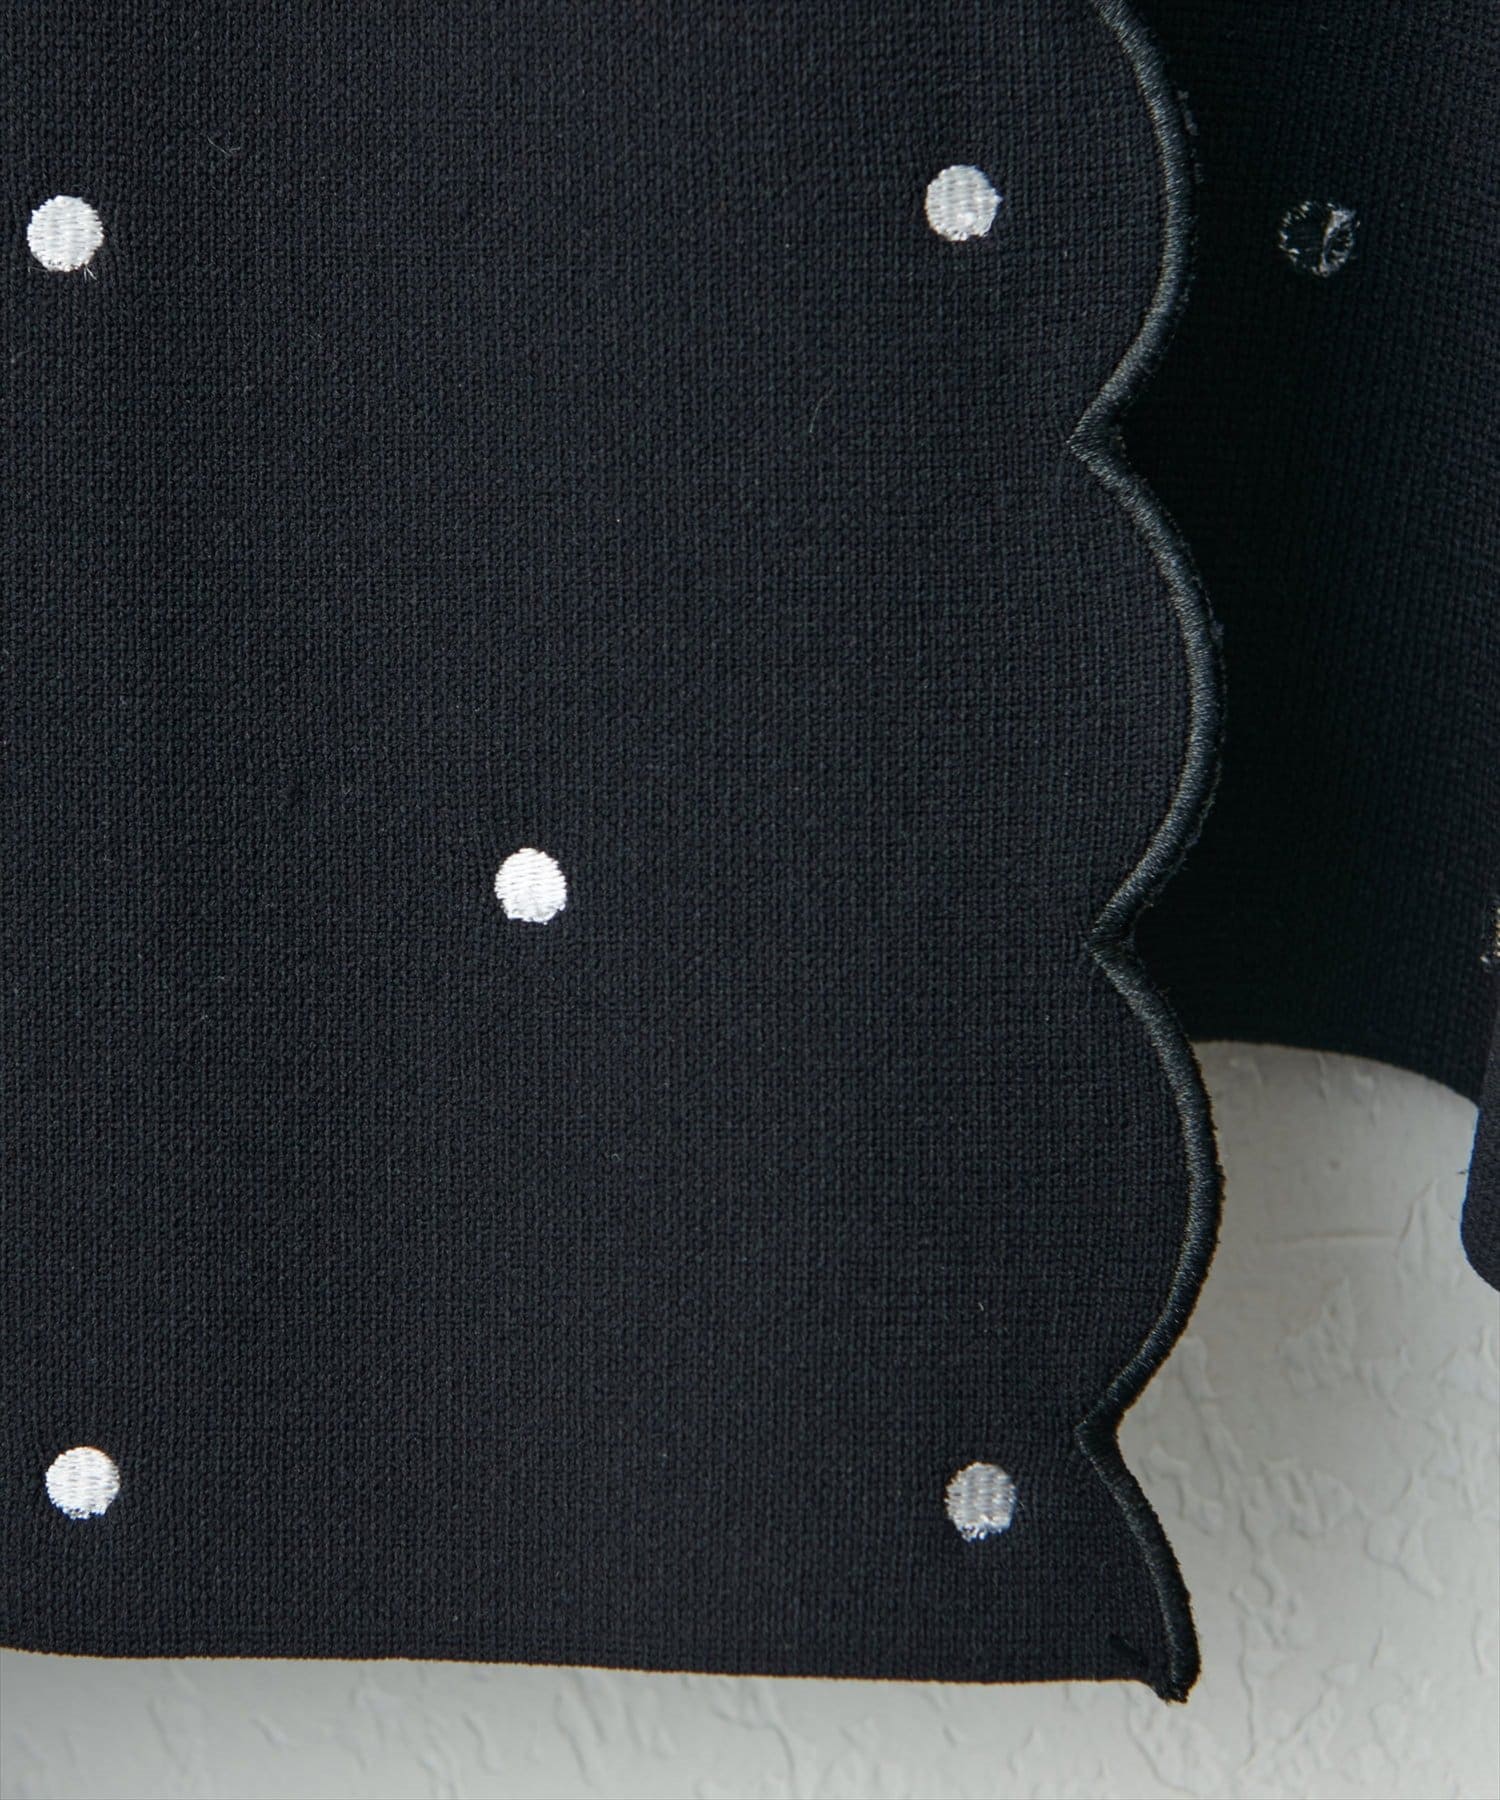 natural couture(ナチュラルクチュール) 【大人気リバイバル】パルクロ限定販売/スカラップ刺繍カーディガン